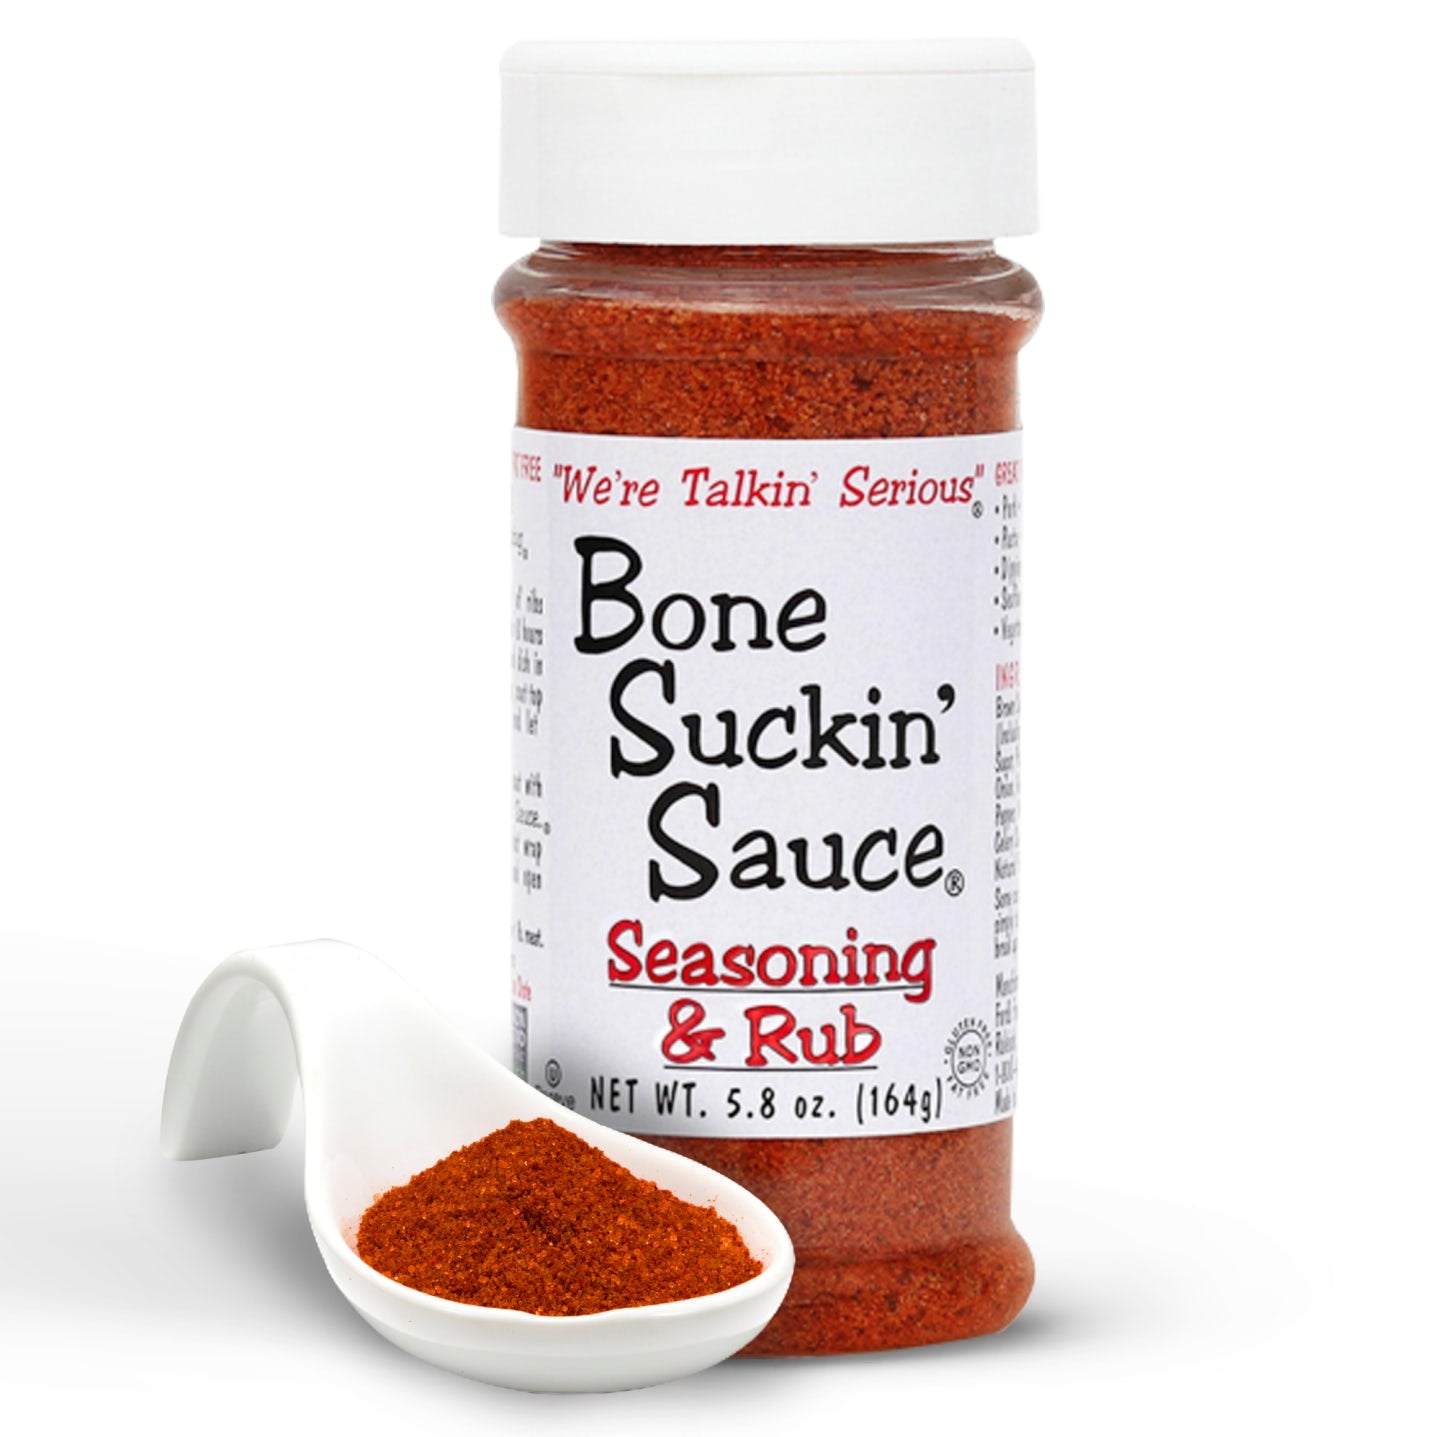 Bone Suckin'® Pork Rib Gift Box - The Best BBQ Ribs in Town